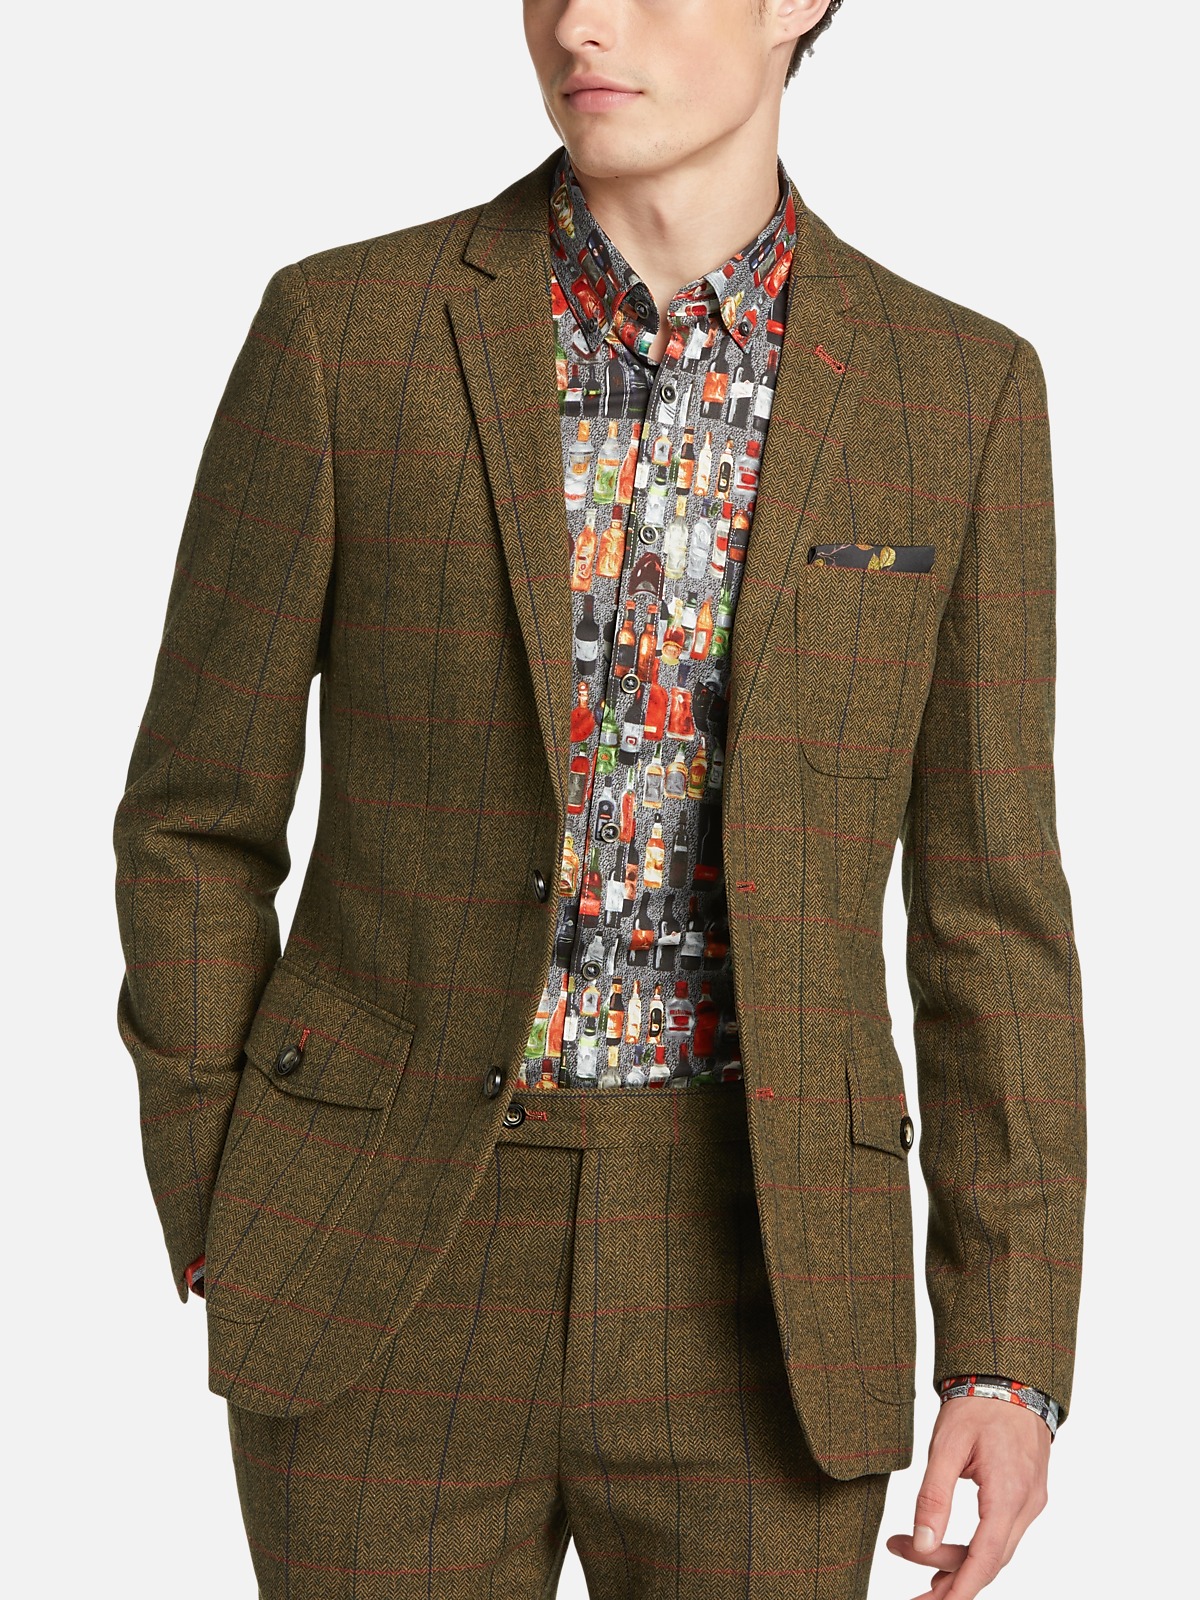 Paisley & Gray Slim Fit Suit Separates Jacket, All Sale